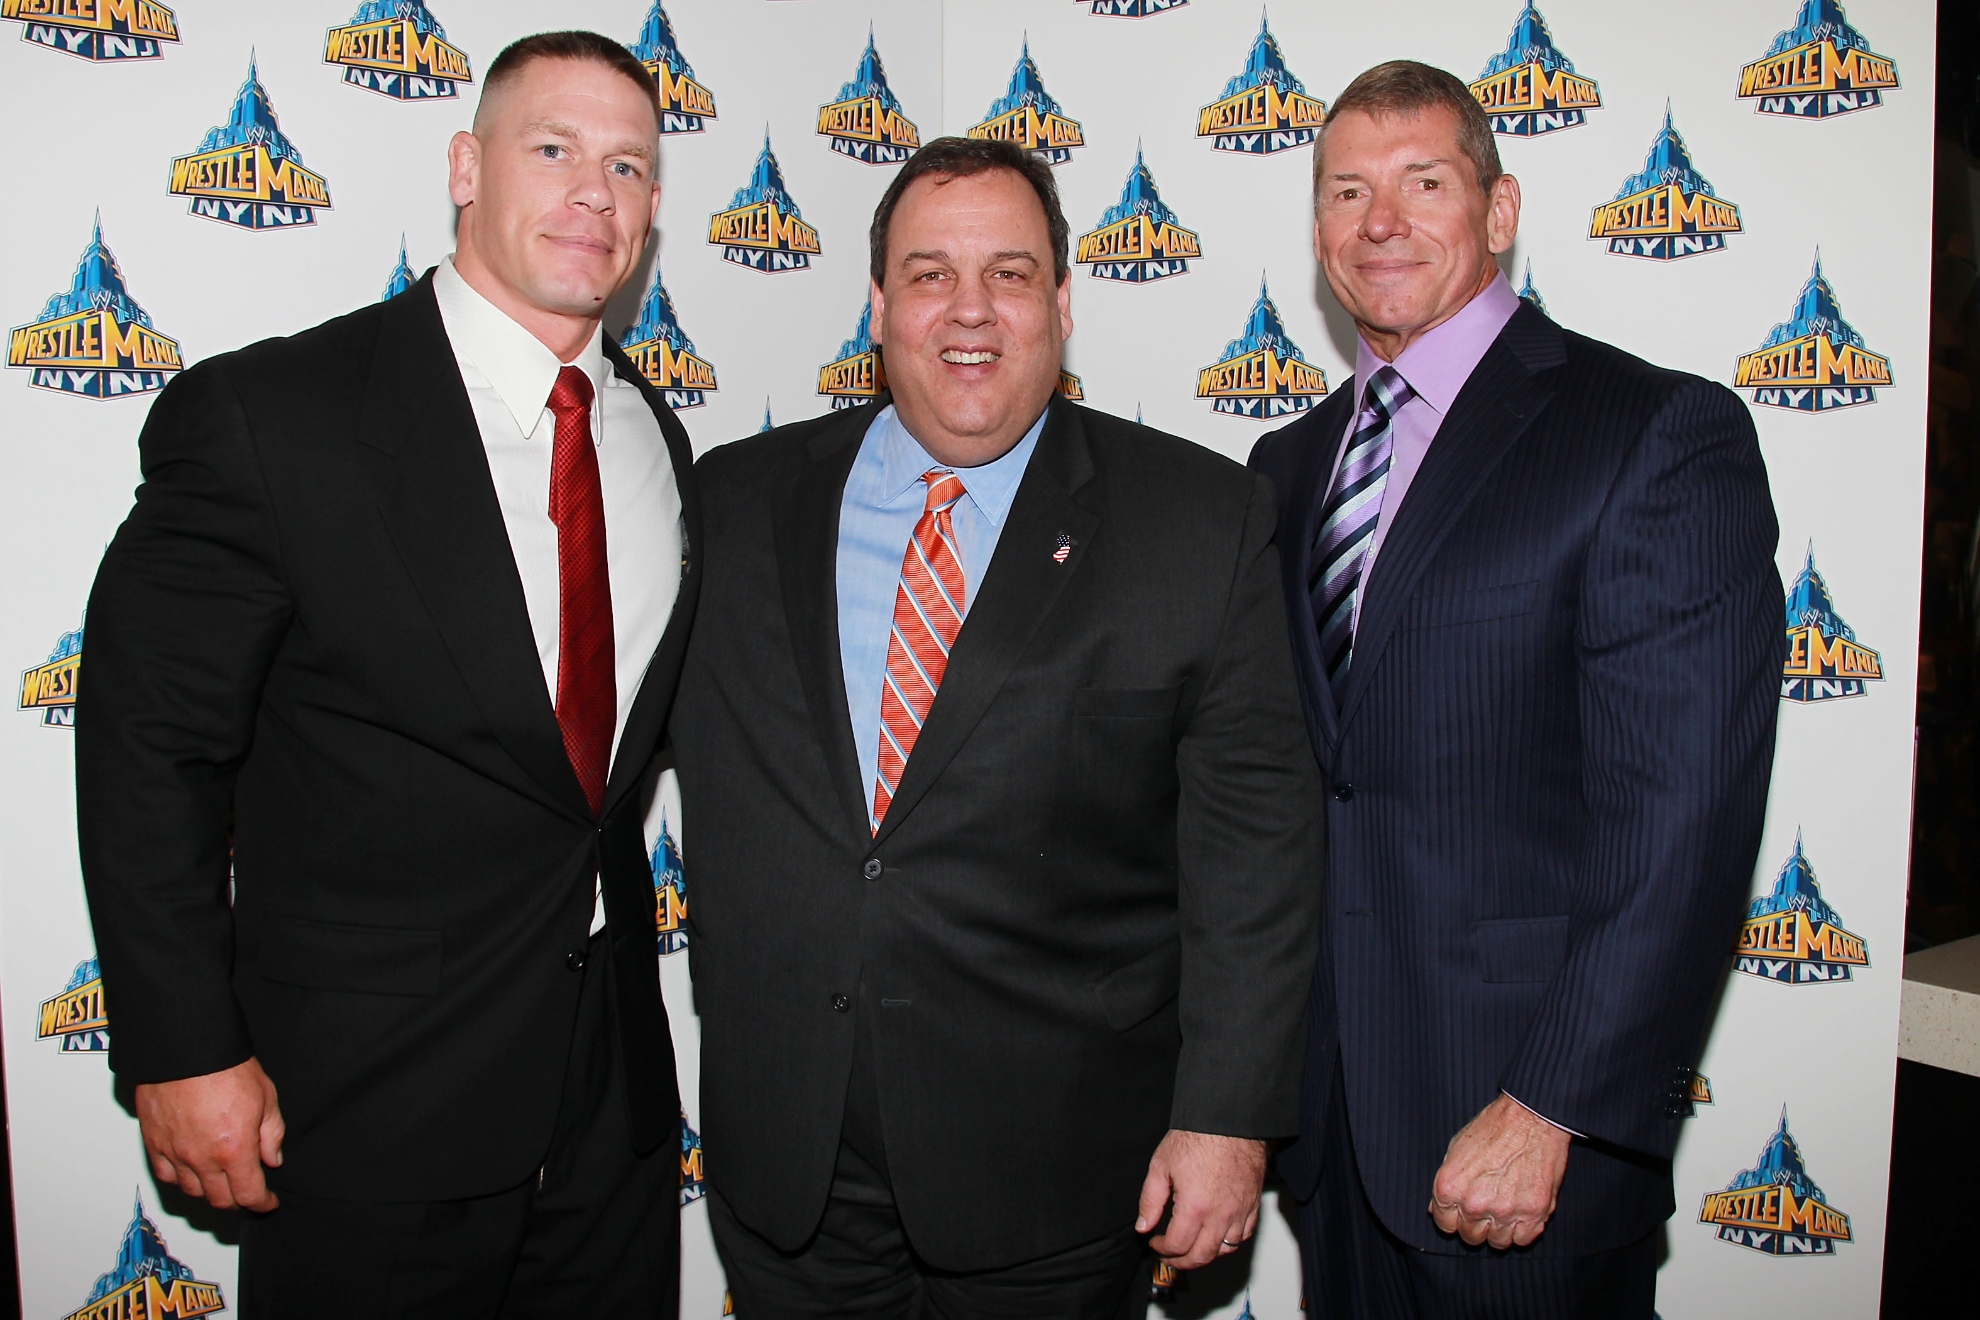 John Cena and Vince McMahon alongside Chris Christie